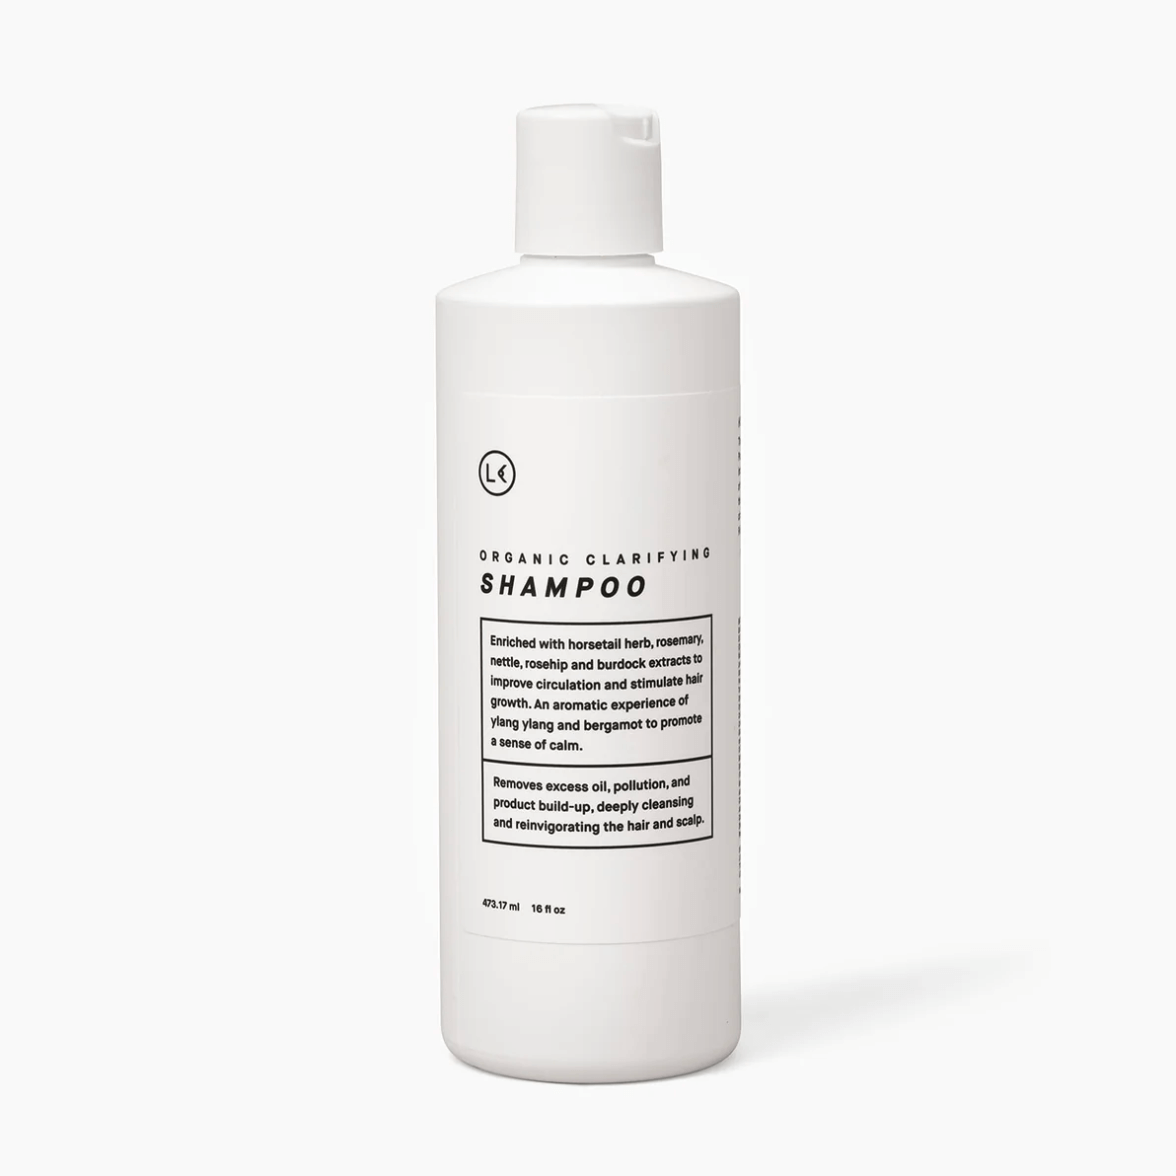 Look Organics Clarifying Shampoo